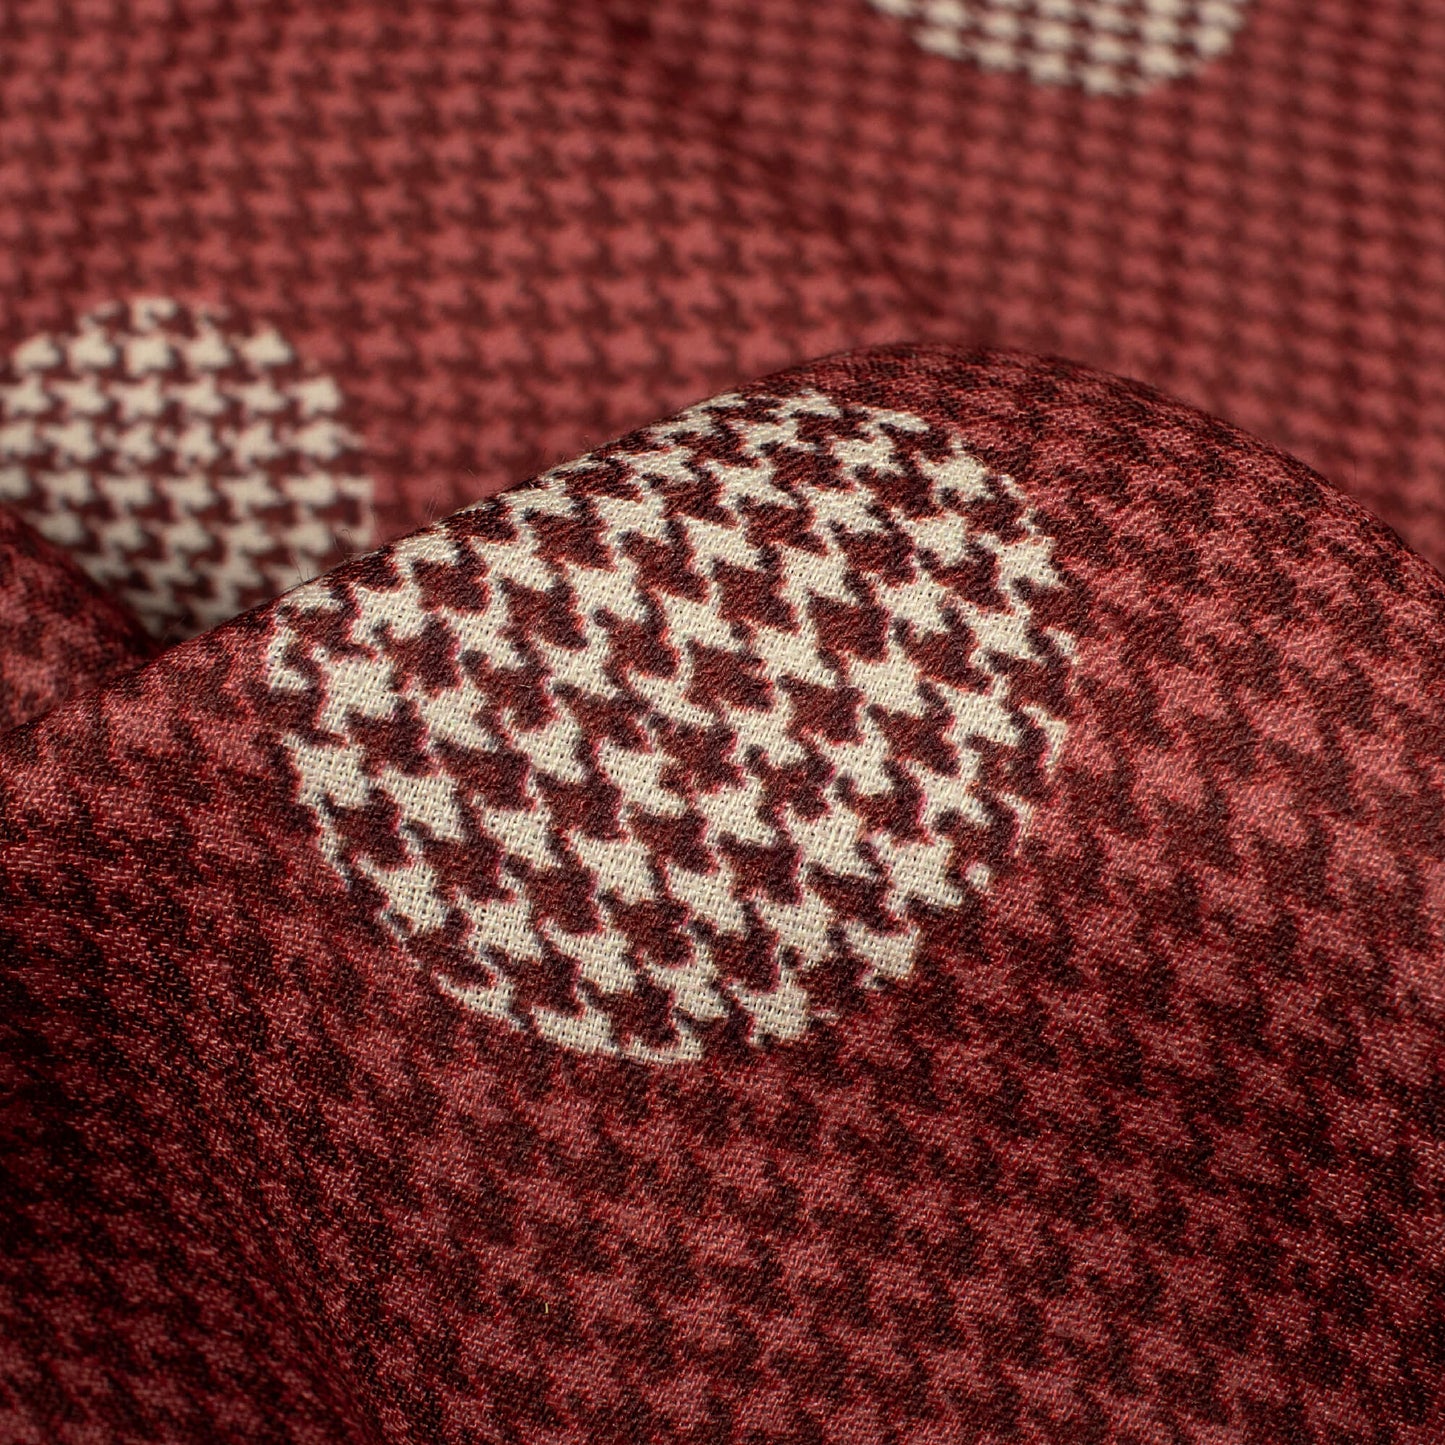 Maroon Polka Dots Pattern Digital Print Moss Crepe Fabric